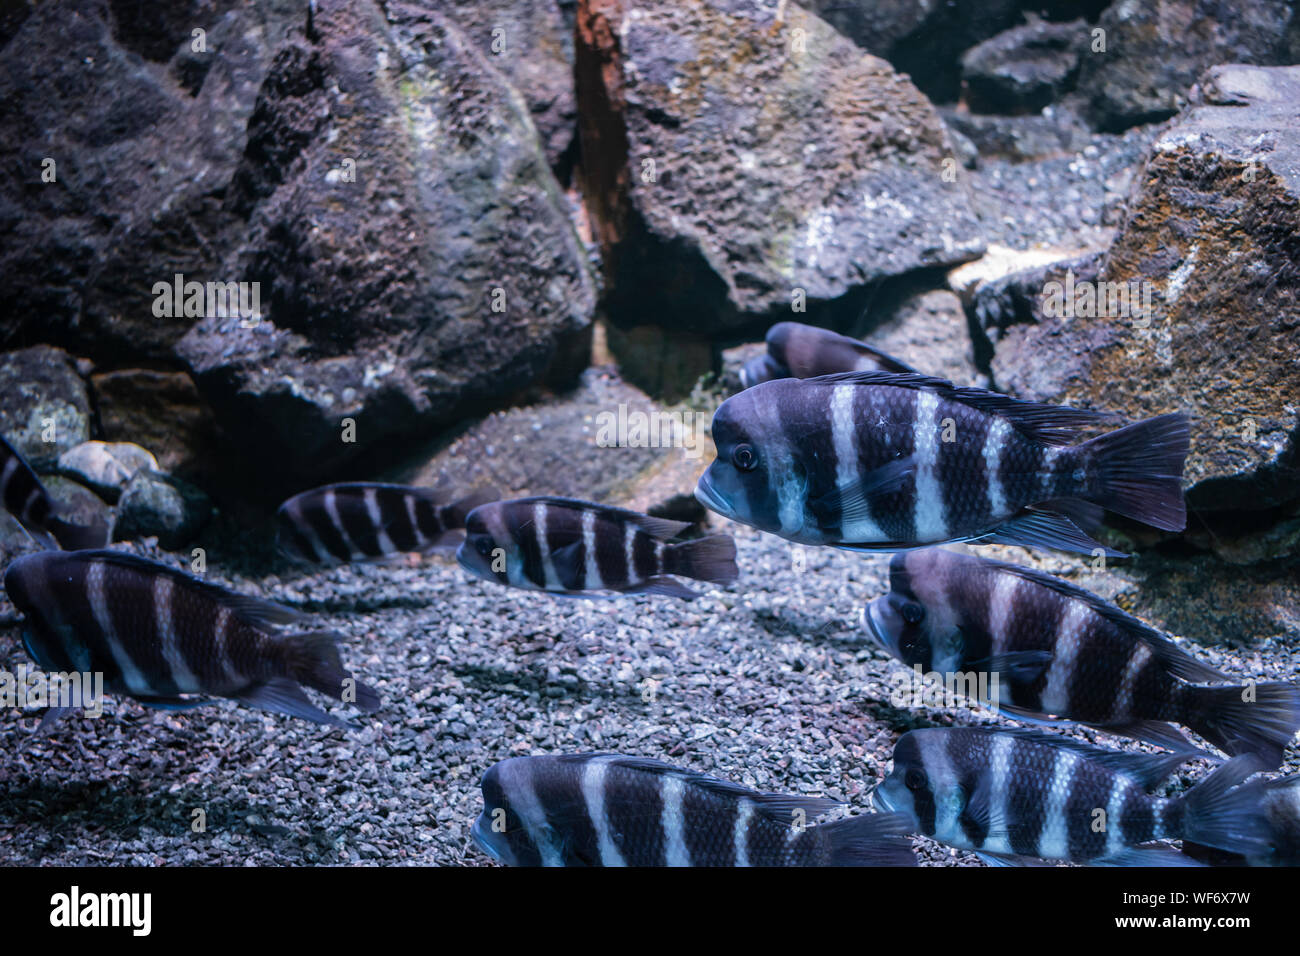 The humphead cichlid fish inside an aquarium. Stock Photo